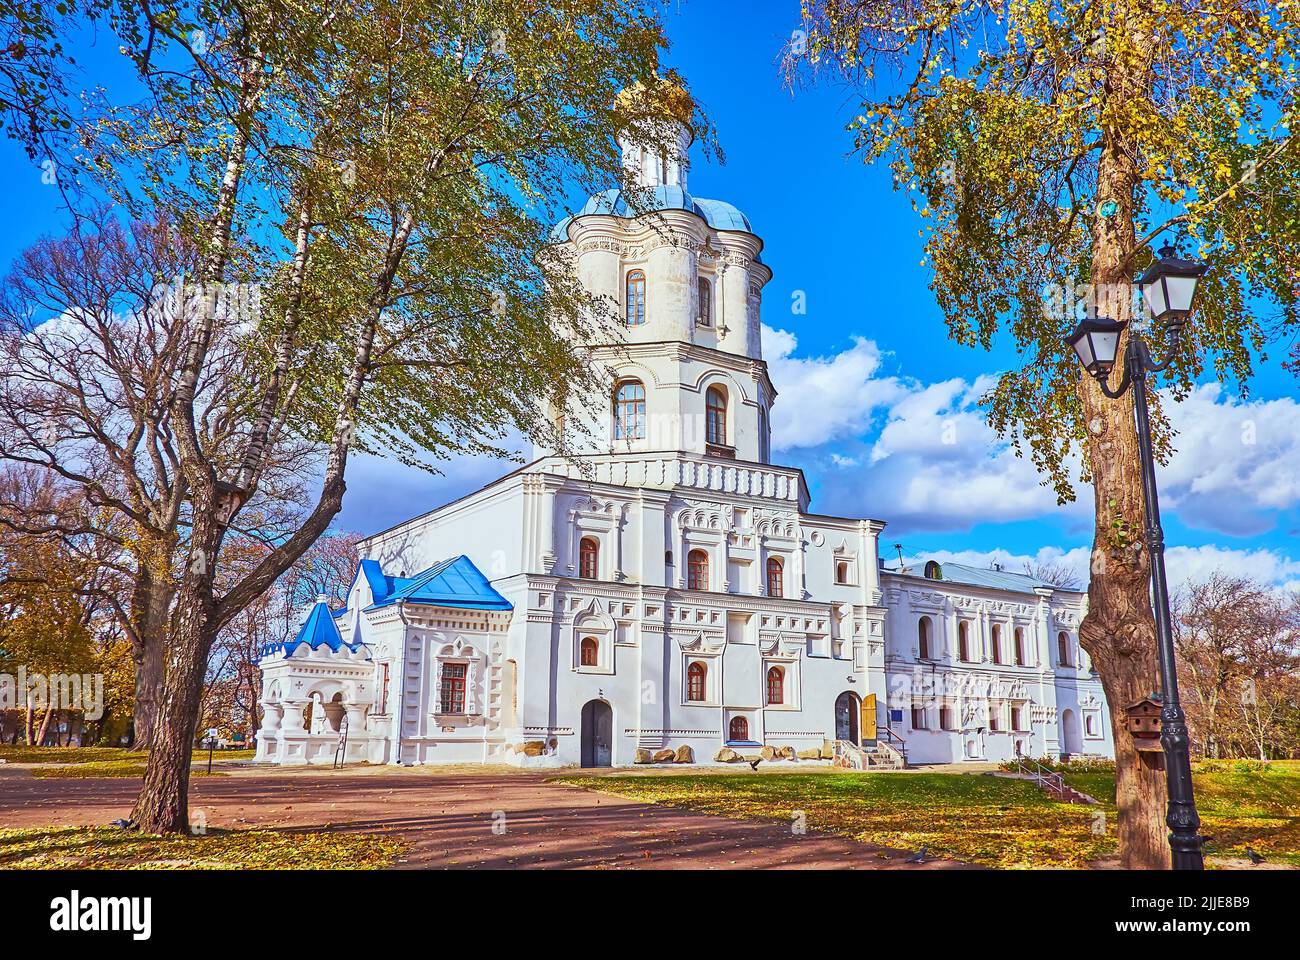 The medieval building of Chernihiv Collegium with tall autumn trees in the foreground, Chernihiv Dytynets (Chernigov Citadel) Park, Chernihiv, Ukraine Stock Photo